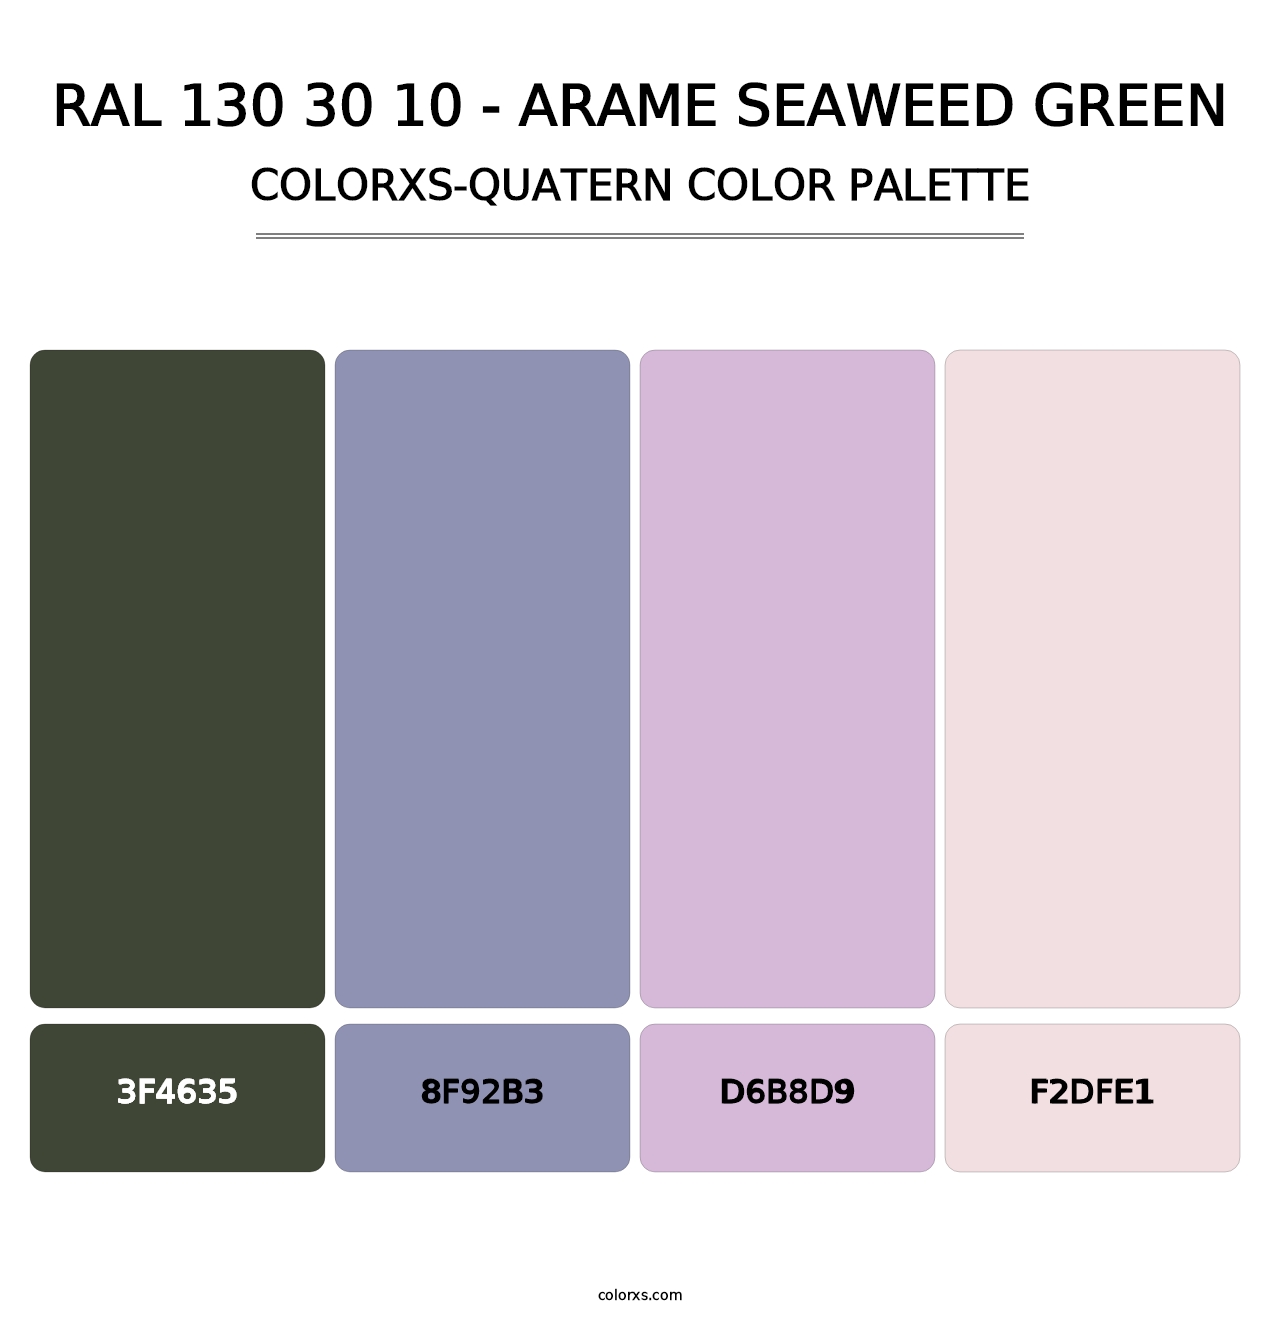 RAL 130 30 10 - Arame Seaweed Green - Colorxs Quatern Palette